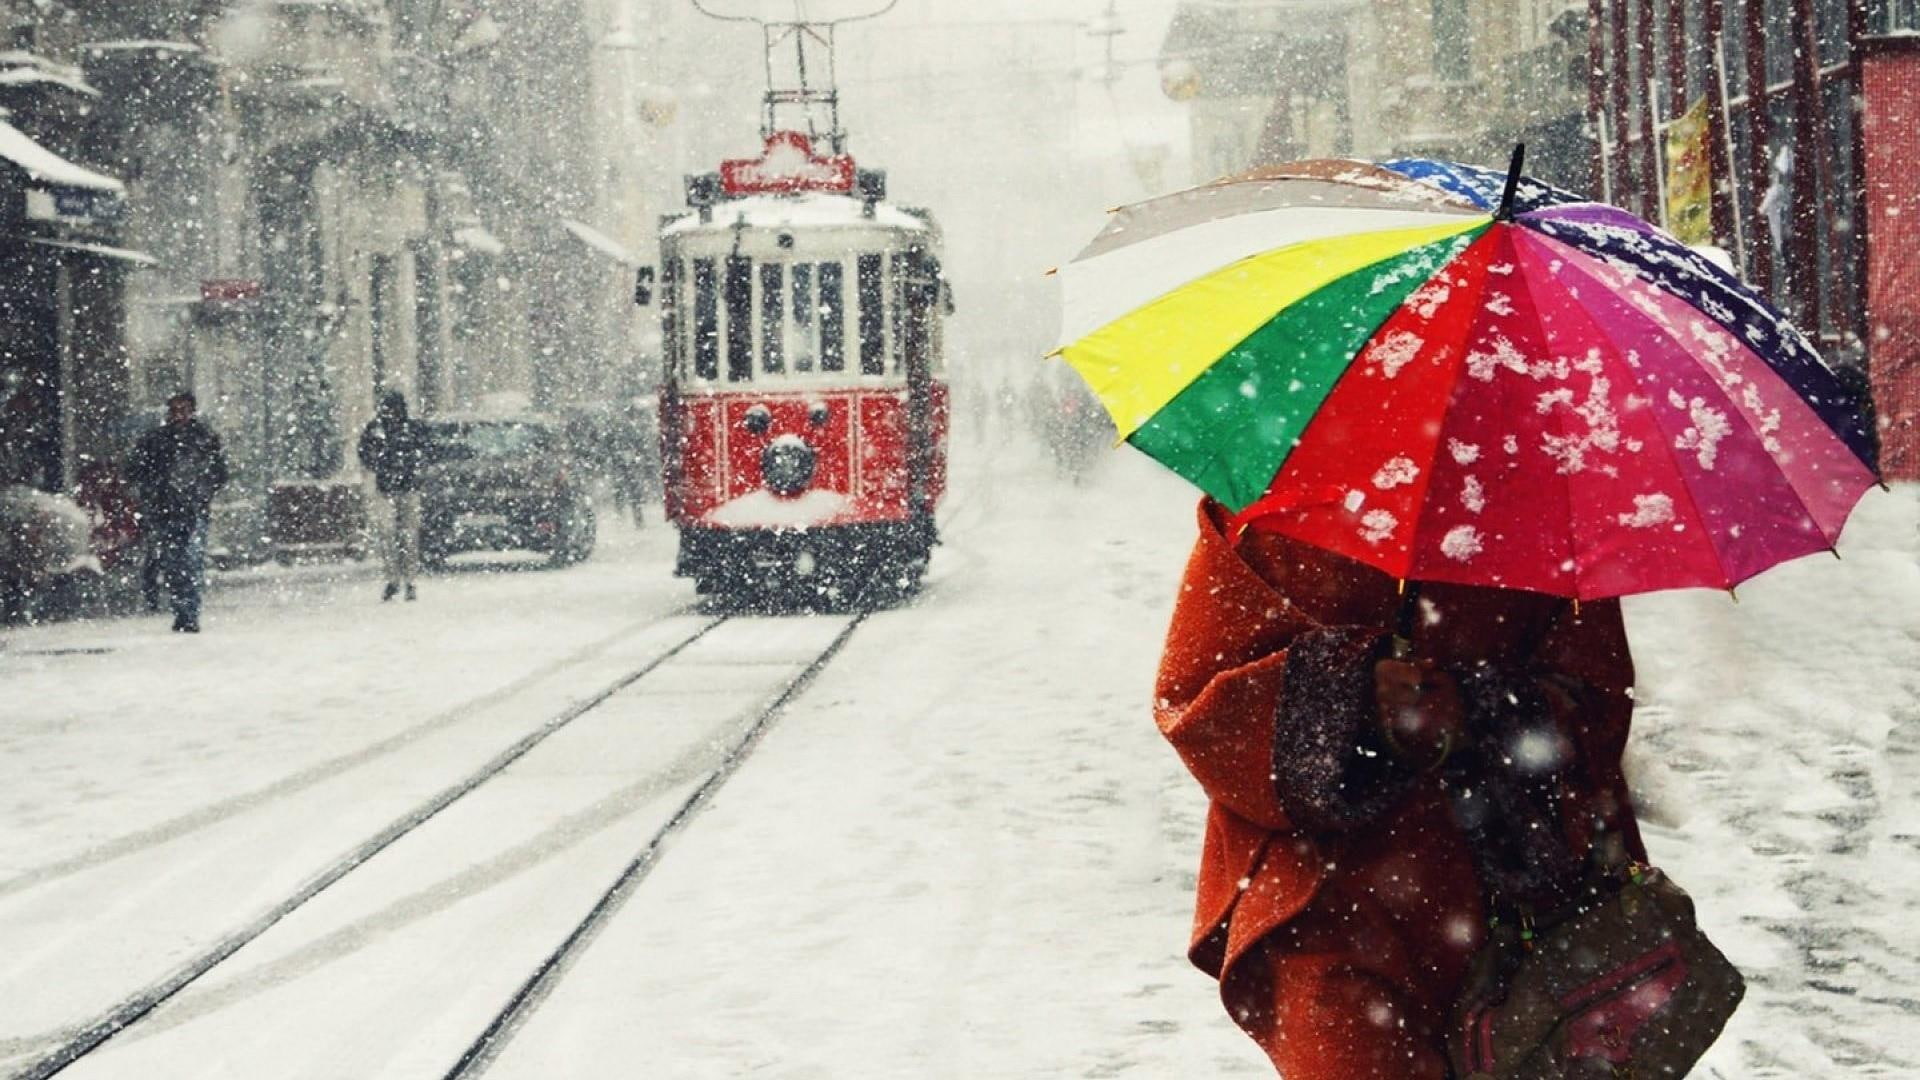 umbrella, snowing, winter, freezing, tram, electrical, snowfall